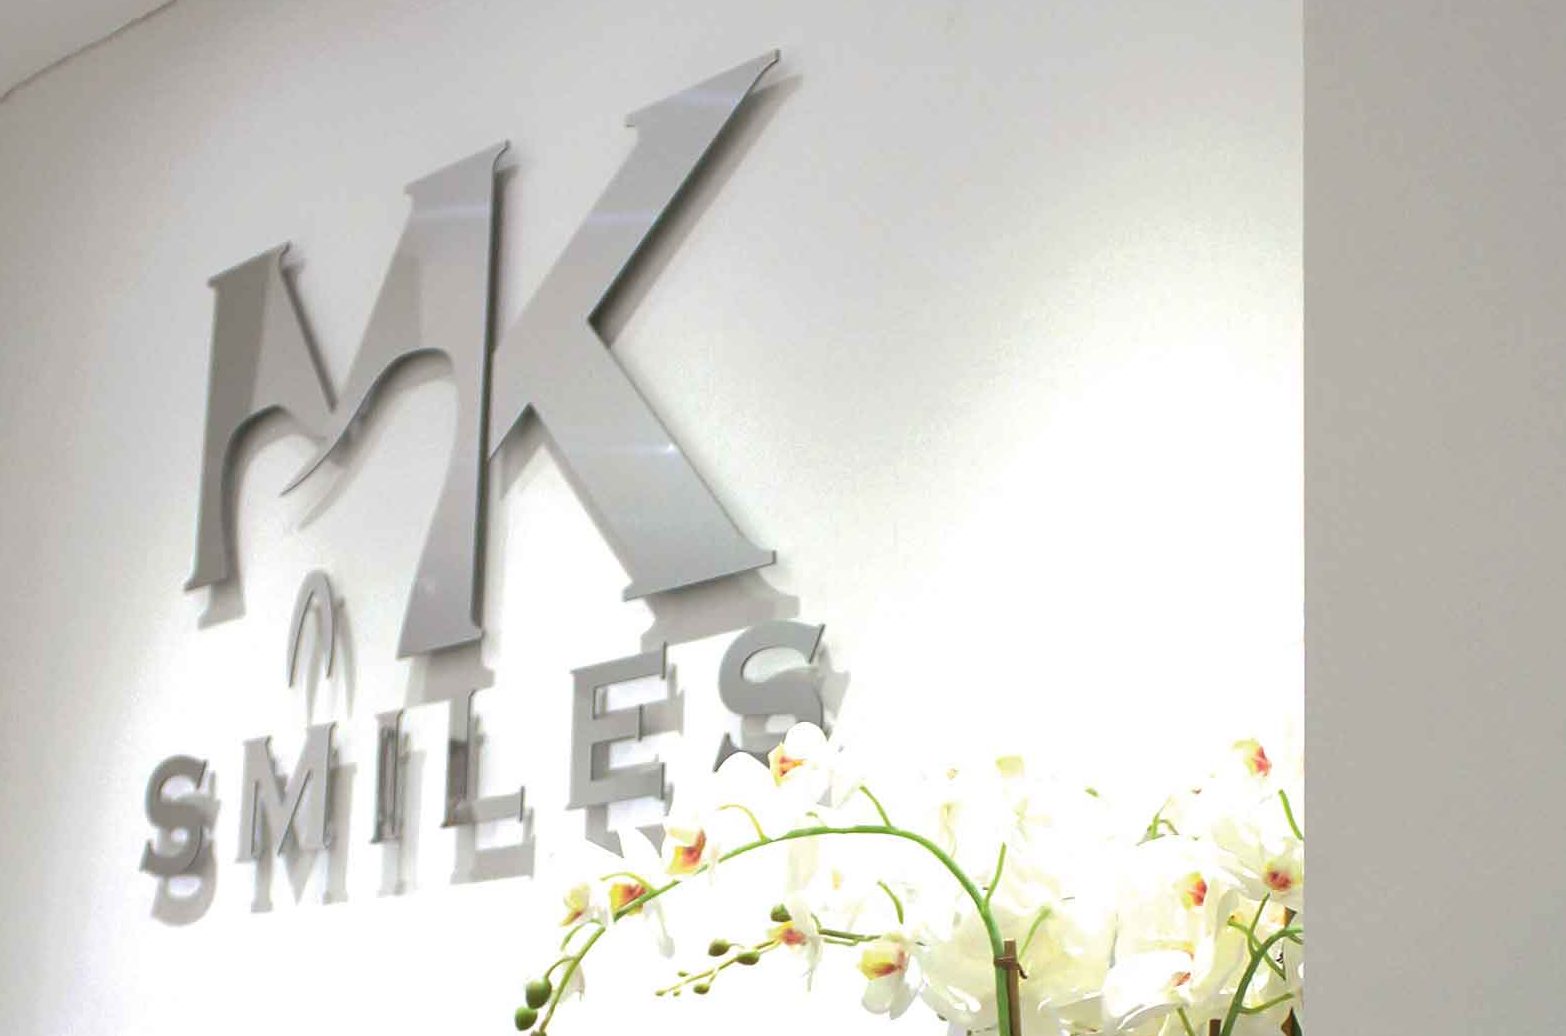 Uma Madhav talks about opening MK Smiles in Milton Keynes